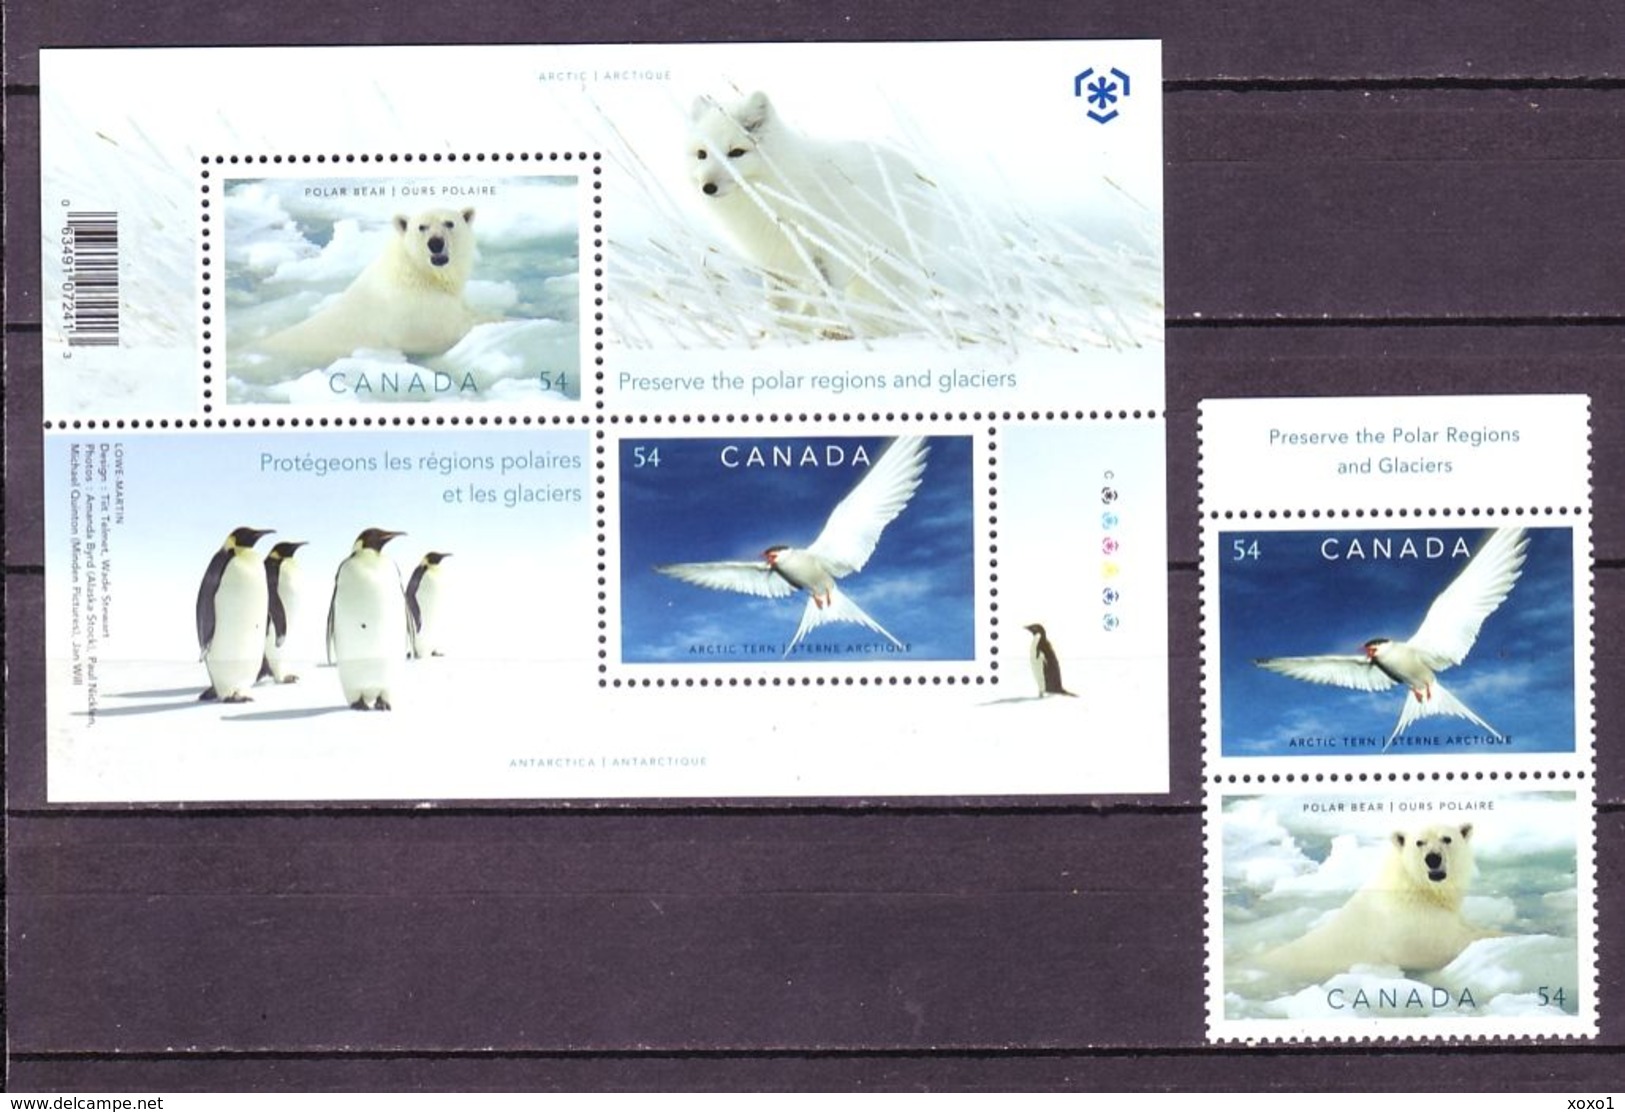 Canada 2009 MiNr. 2547 - 2548 (Block 113) Kanada Fauna BIRDS POLAR YEAR 2v+1bl MNH** 4.80 € - Internationale Pooljaar